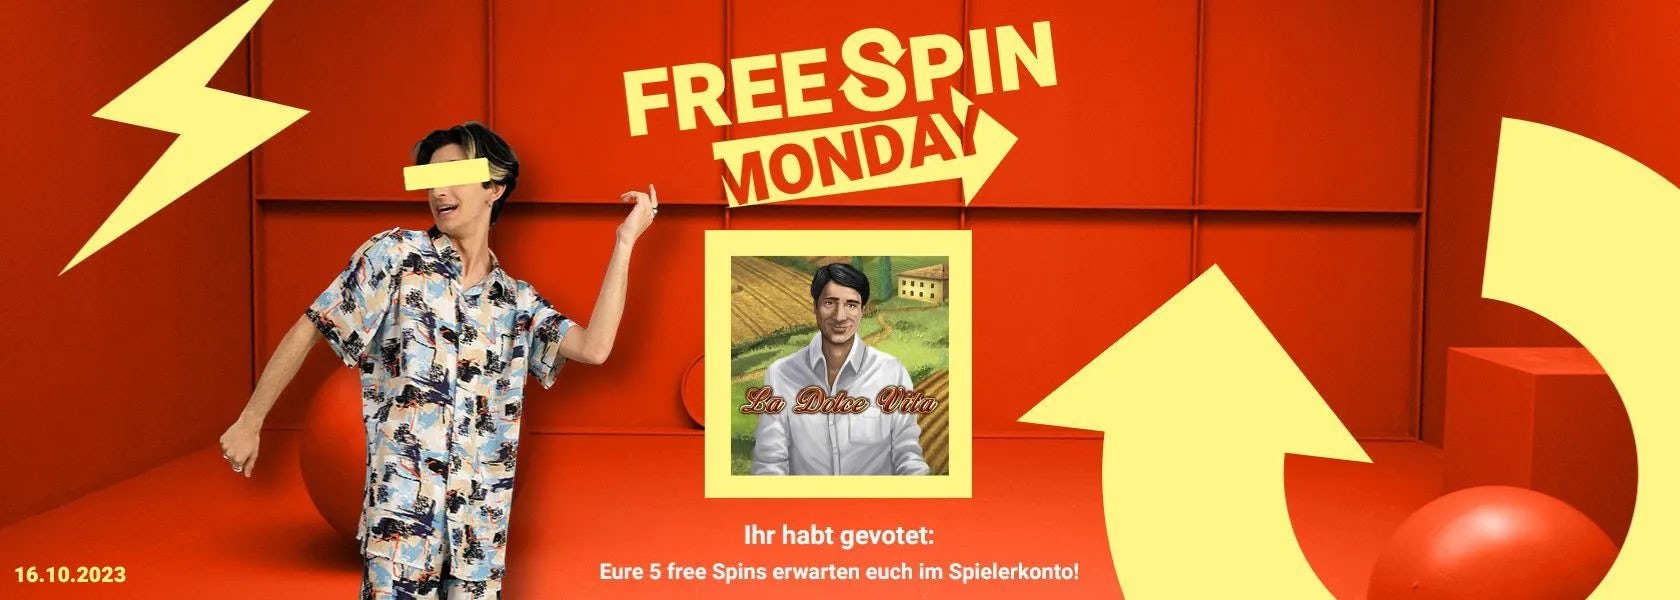 bingbong-free-spin-monday-161023